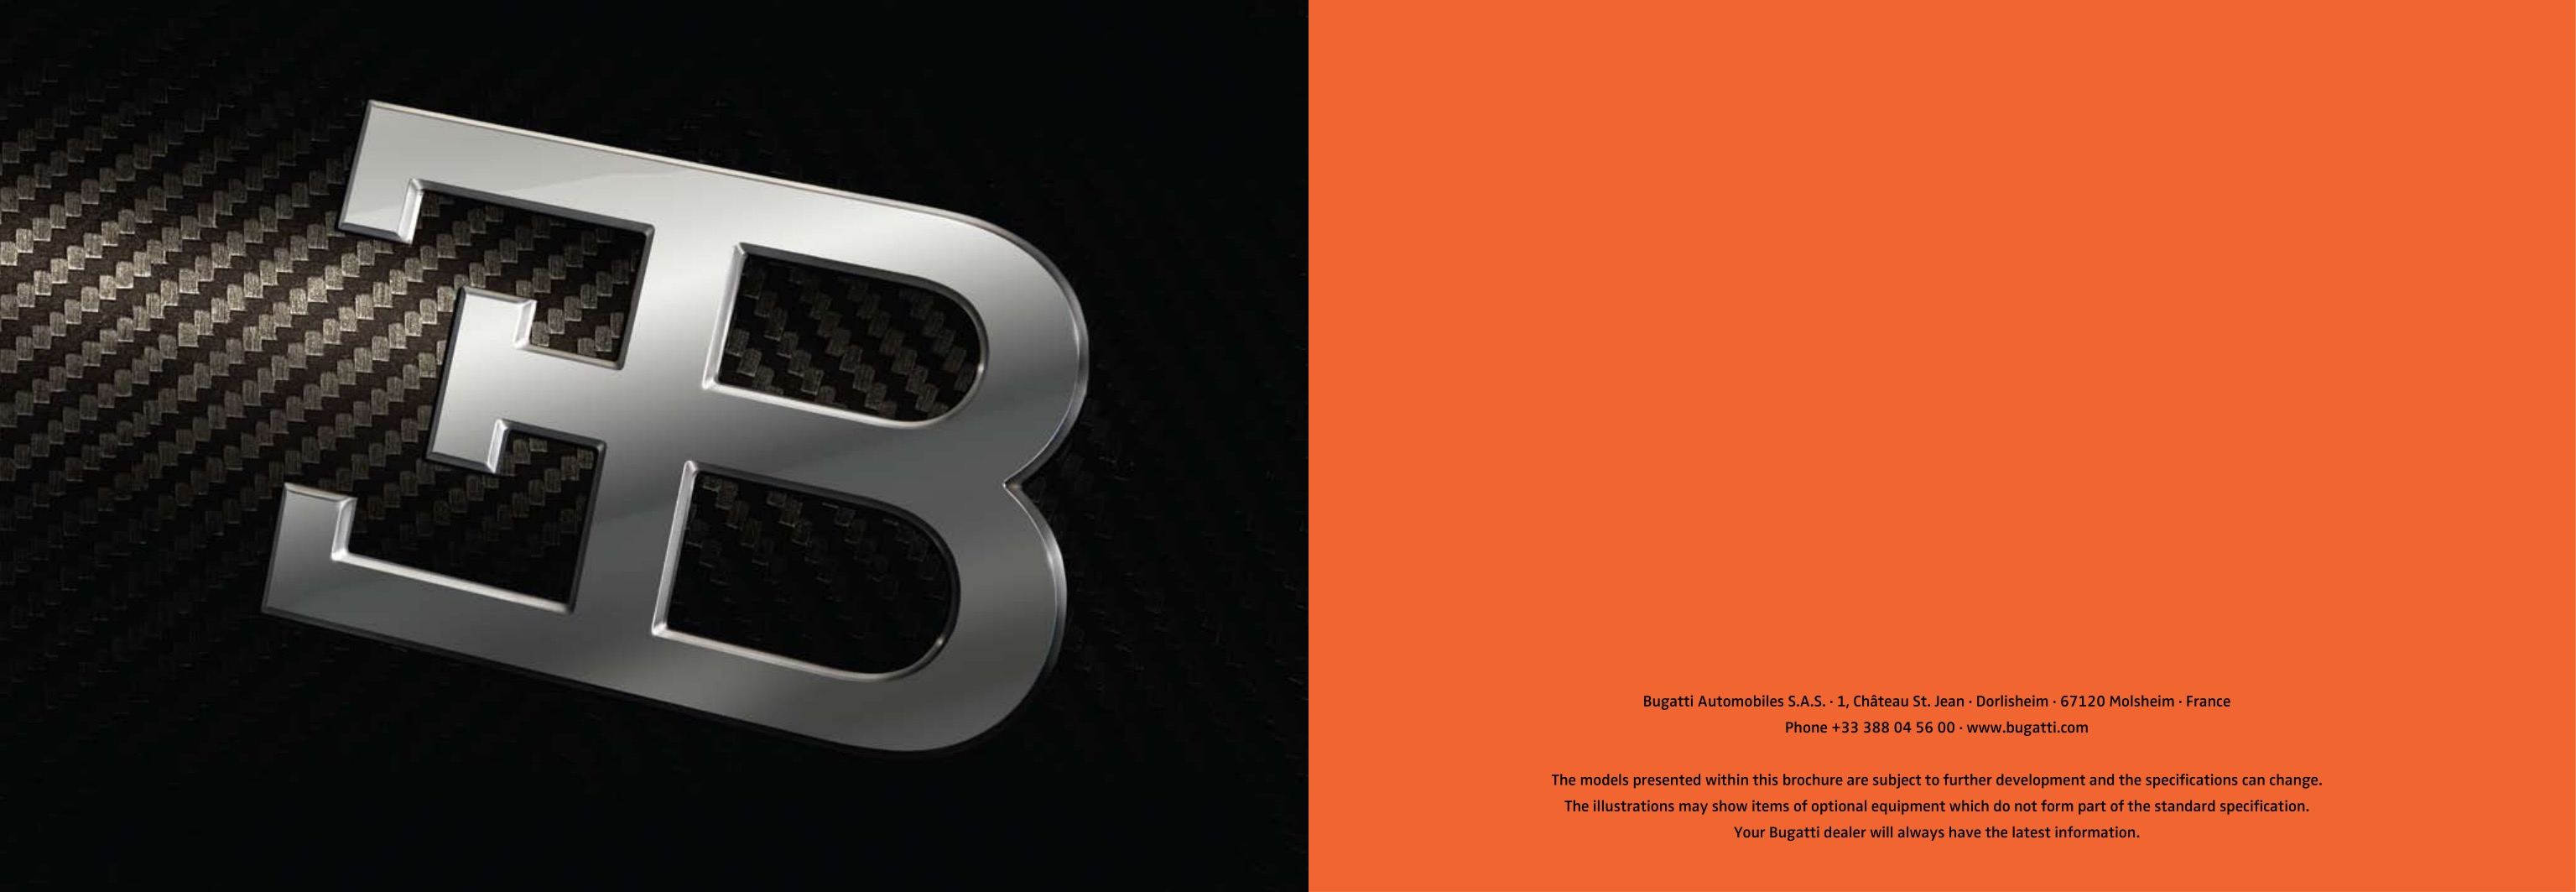 2008 Bugatti Veyron 16.4 Brochure Page 41